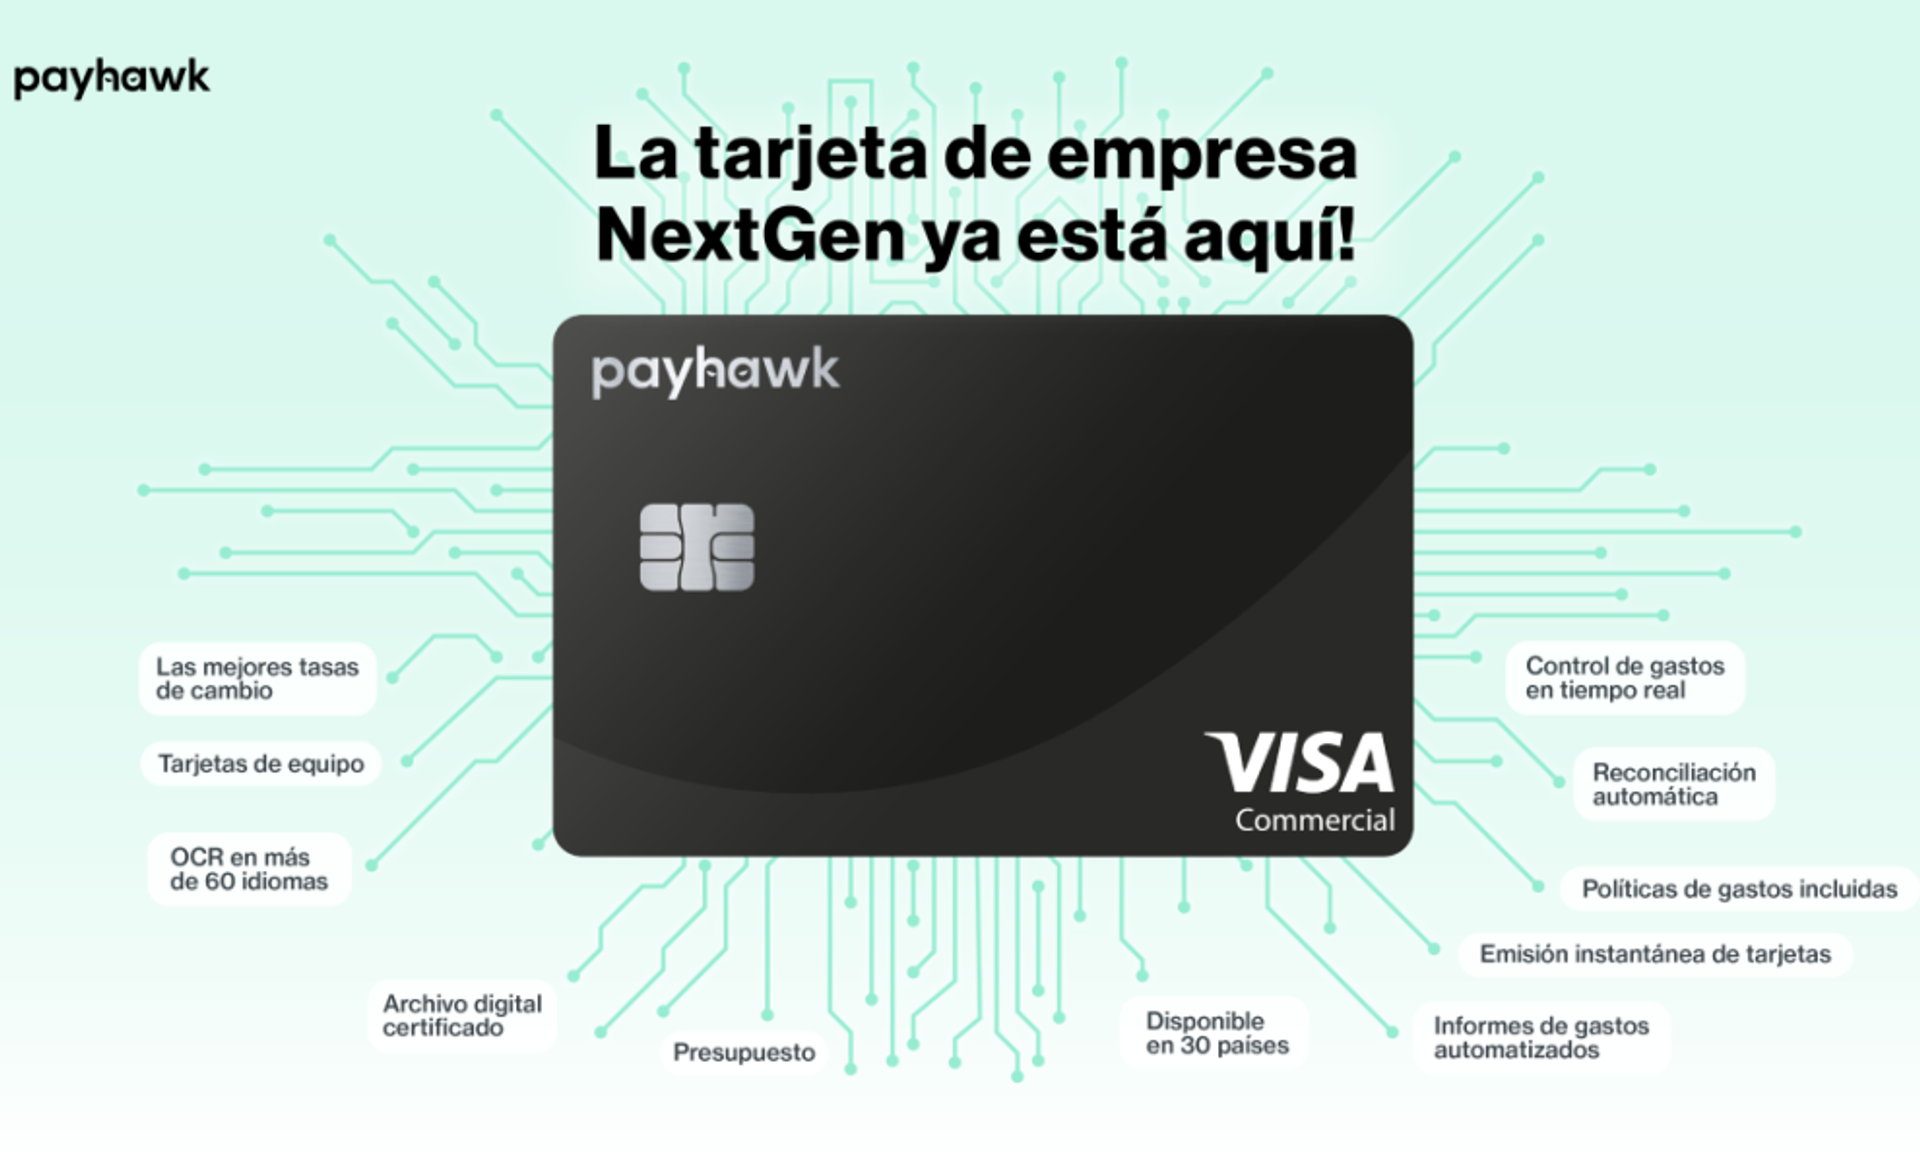 Payhawk tarjeta NextGen